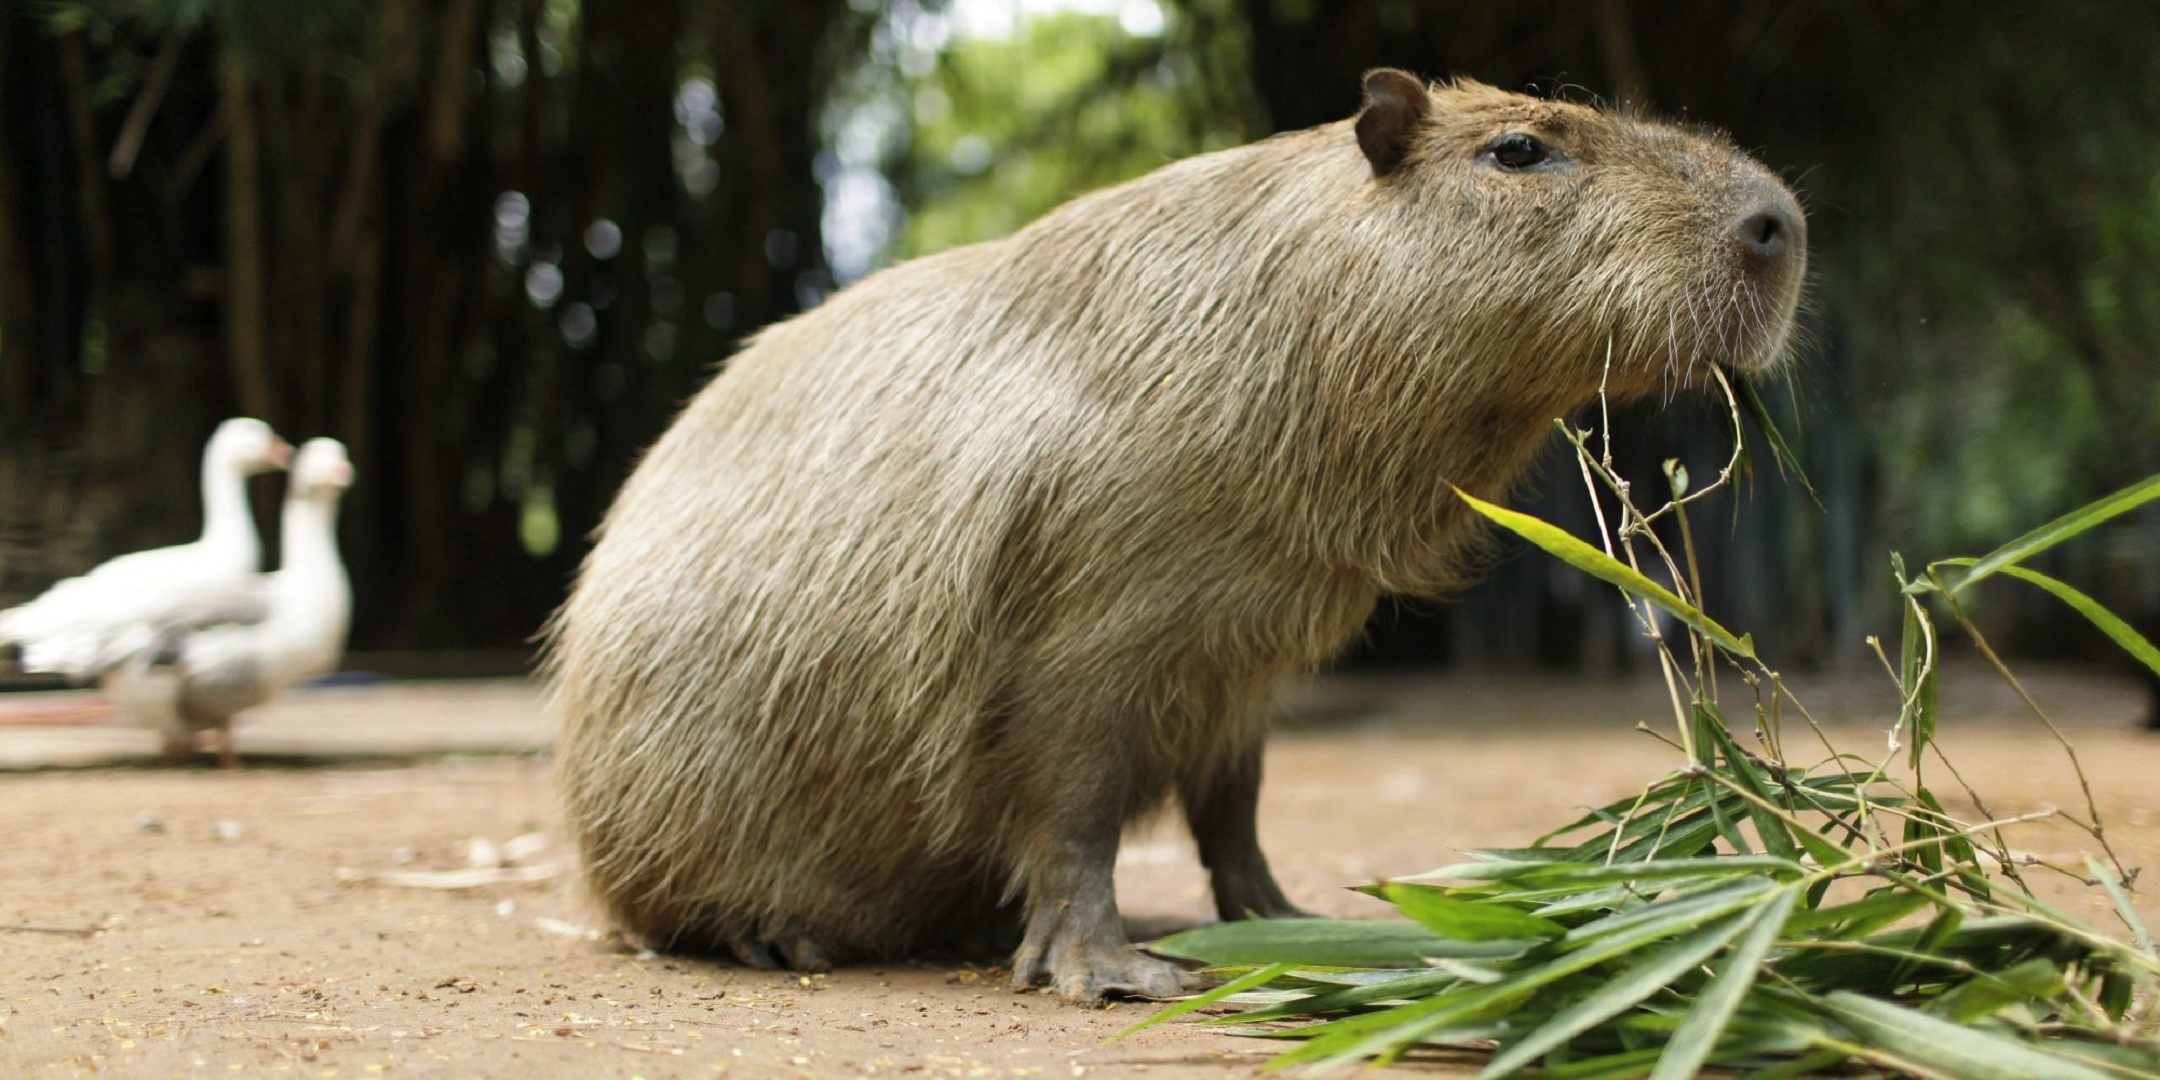 Capybara wallpaper, HD background, Cute animal, High-resolution picture, 2160x1080 Dual Screen Desktop